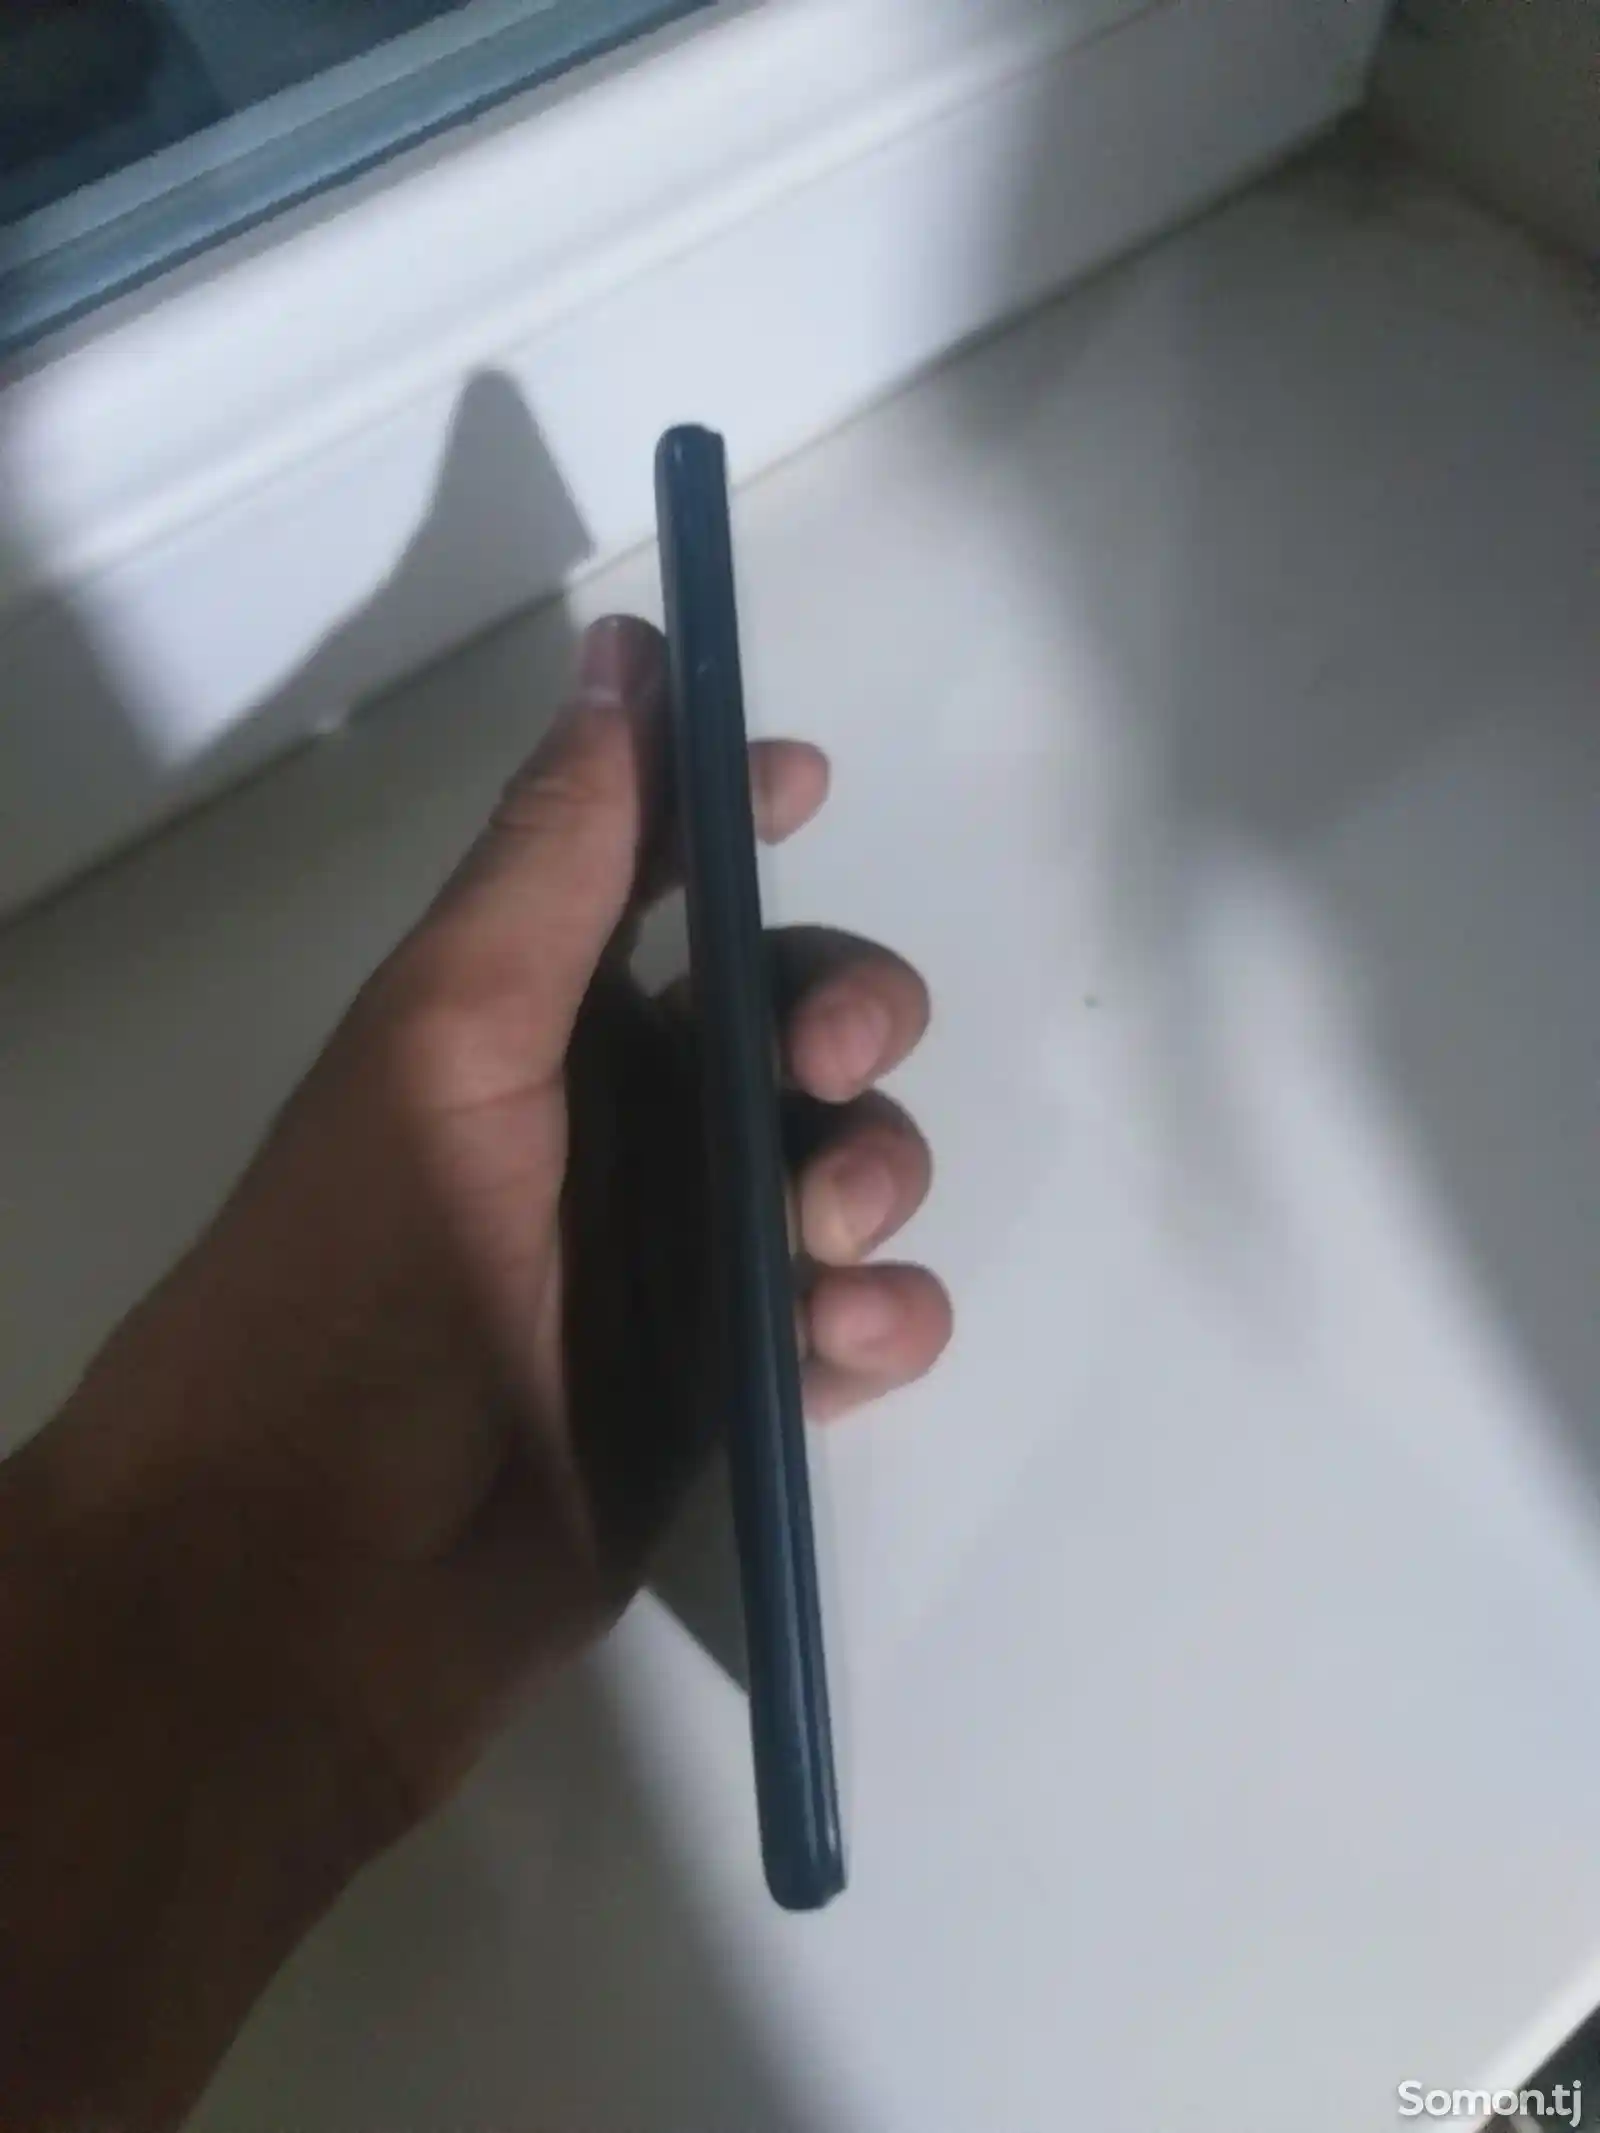 Xiaomi Redmi 9С-2